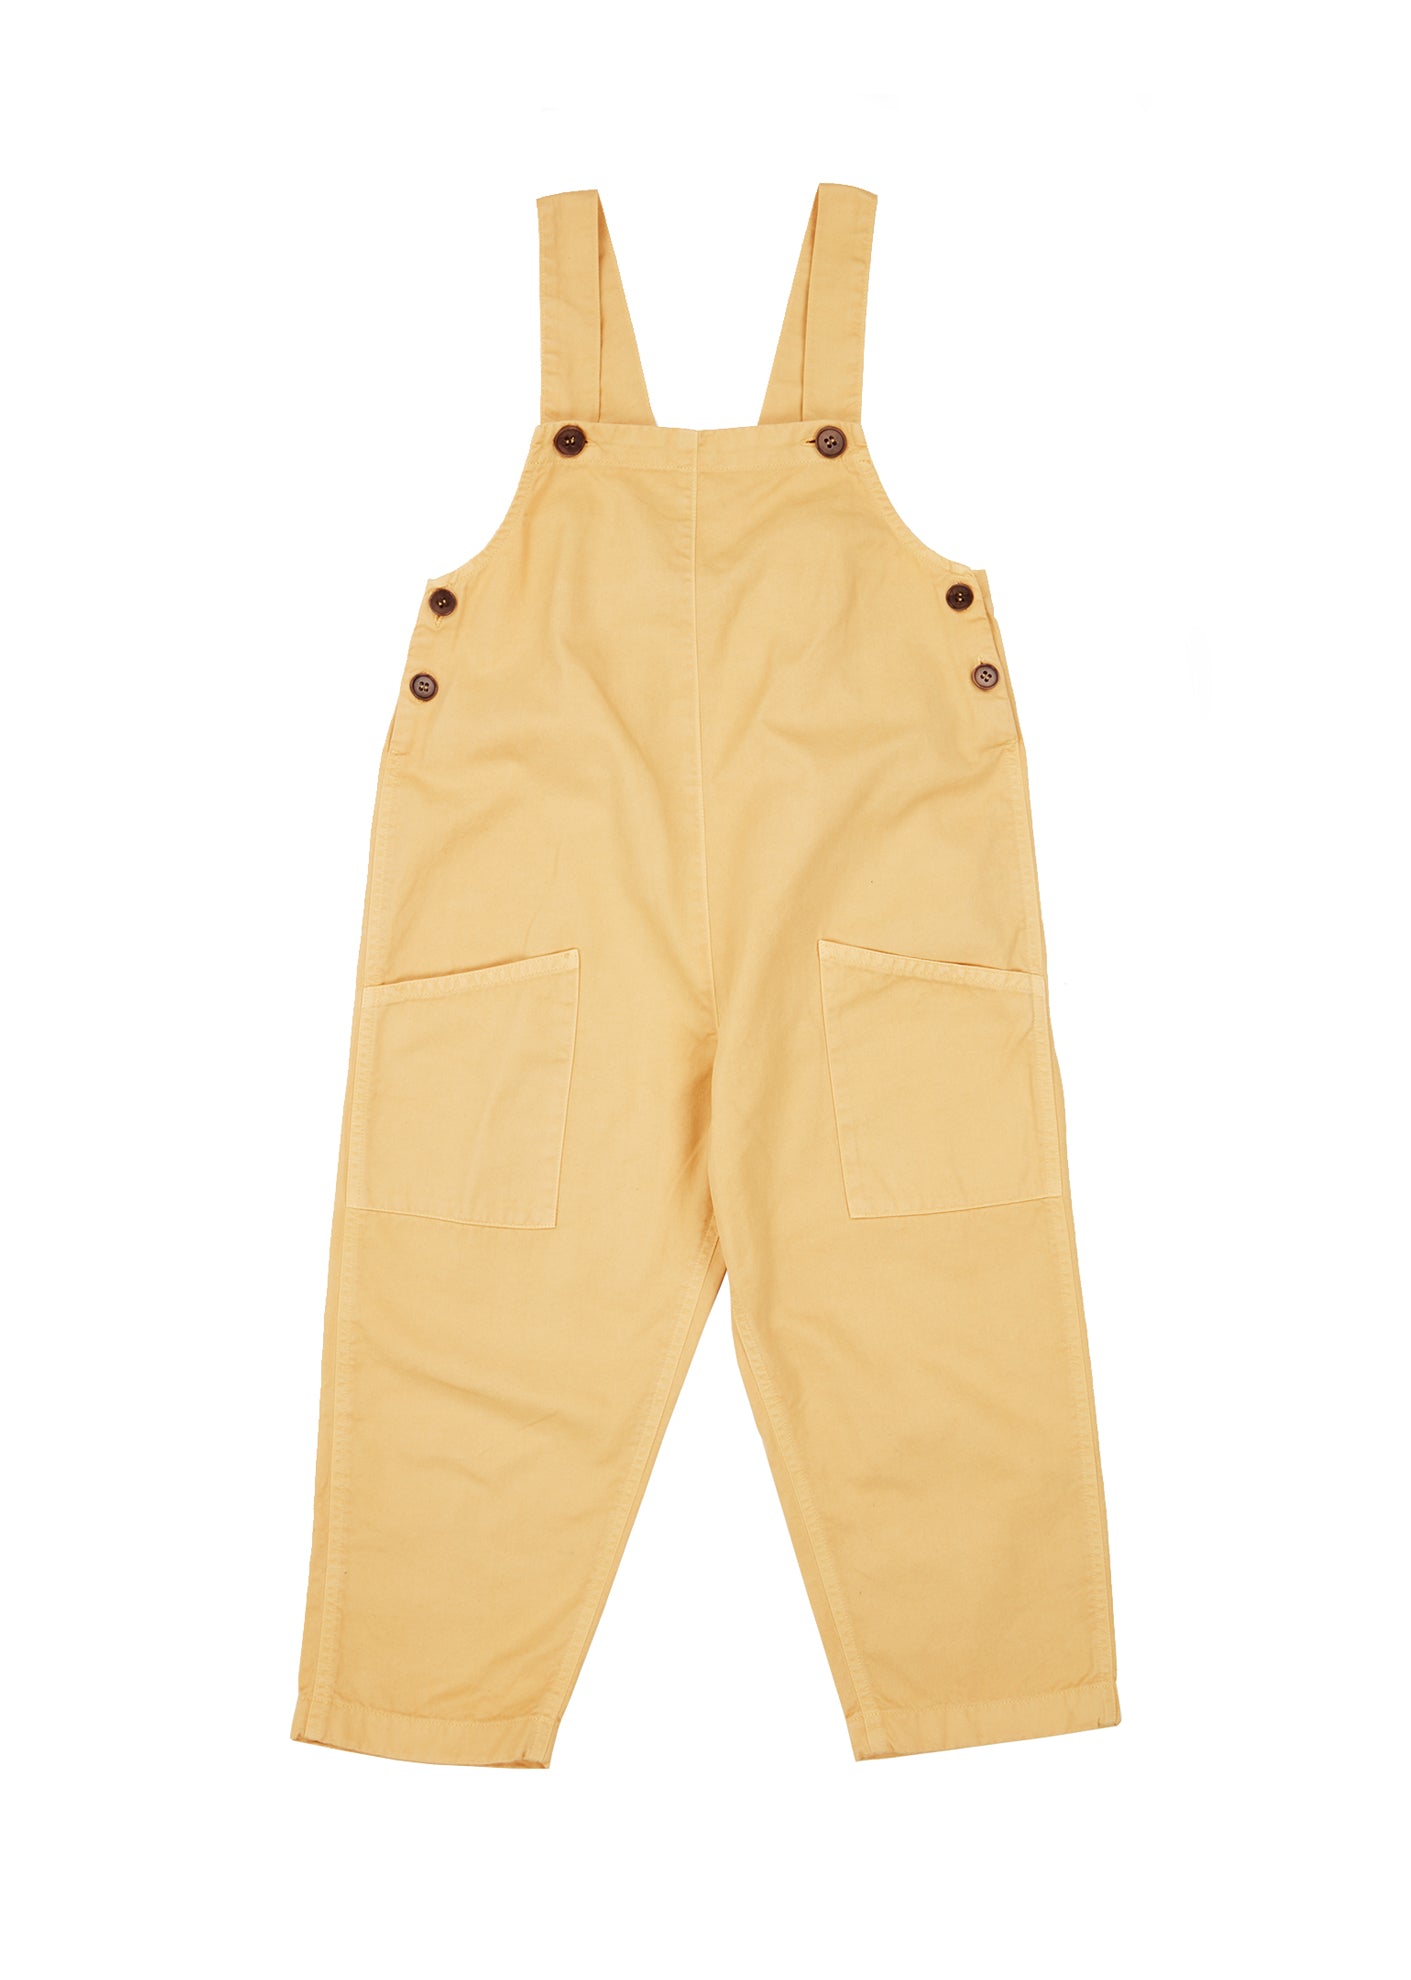 Girls Yellow Cotton Jumpsuit